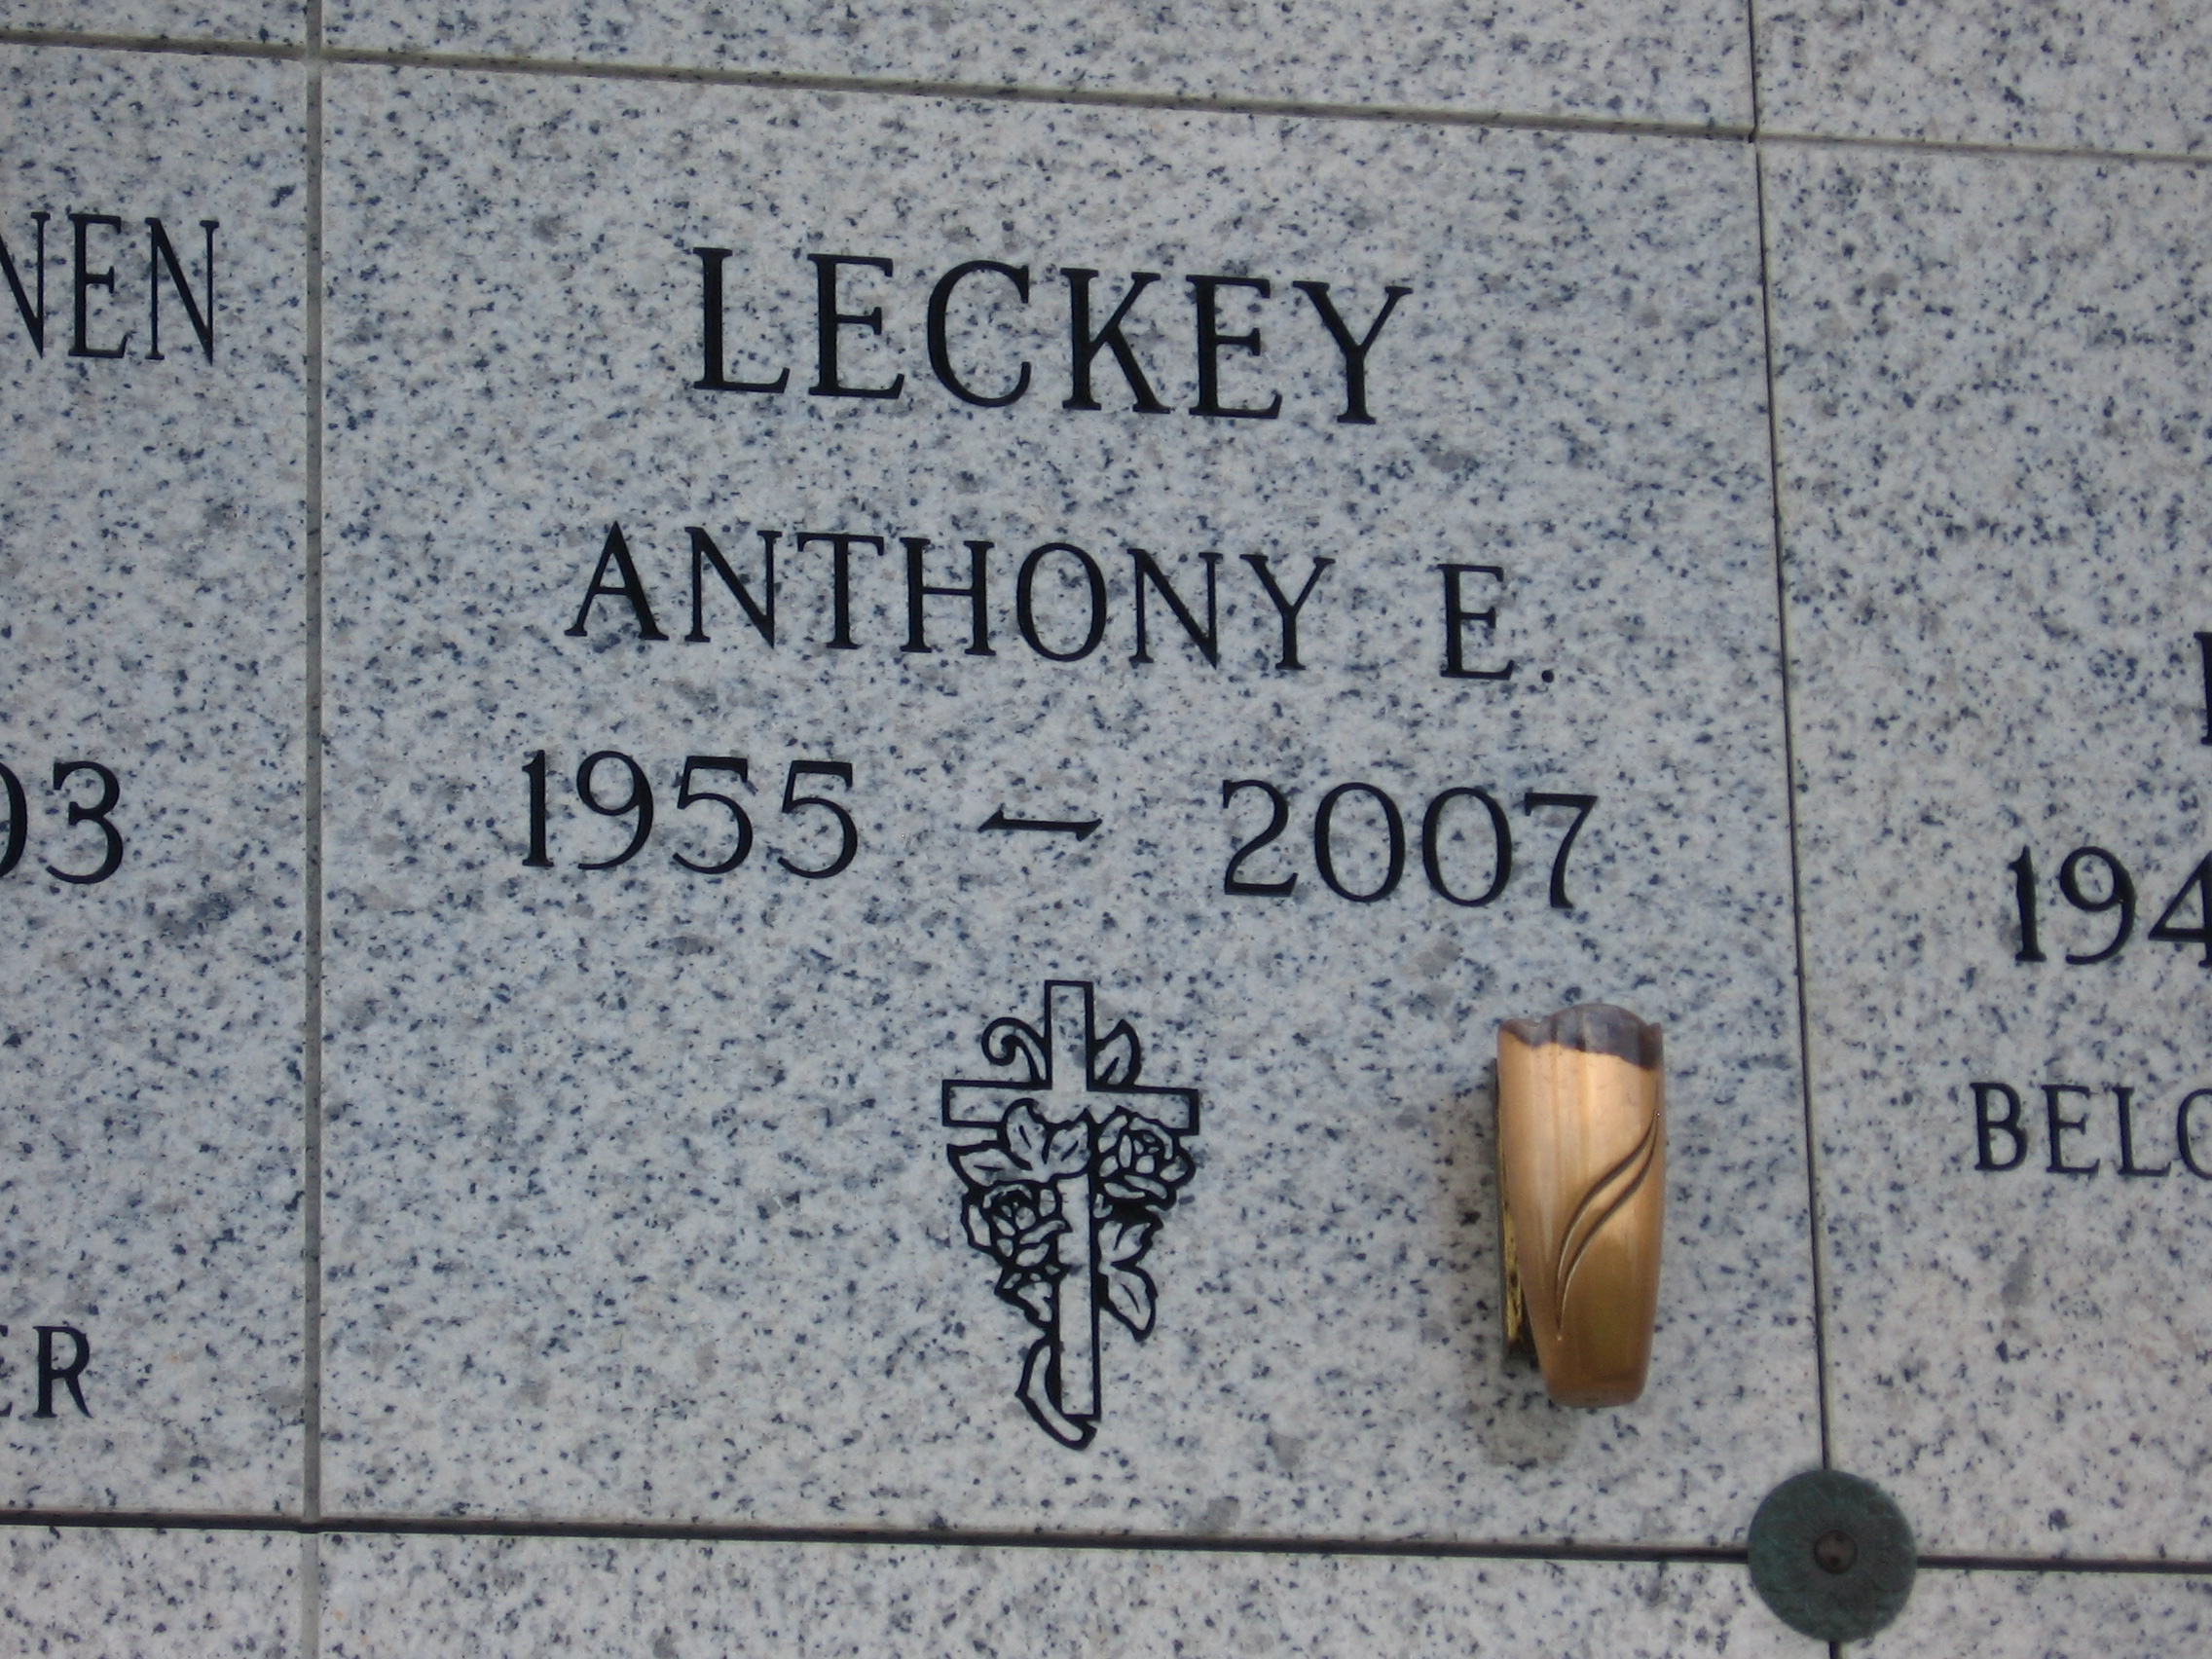 Anthony E Leckey